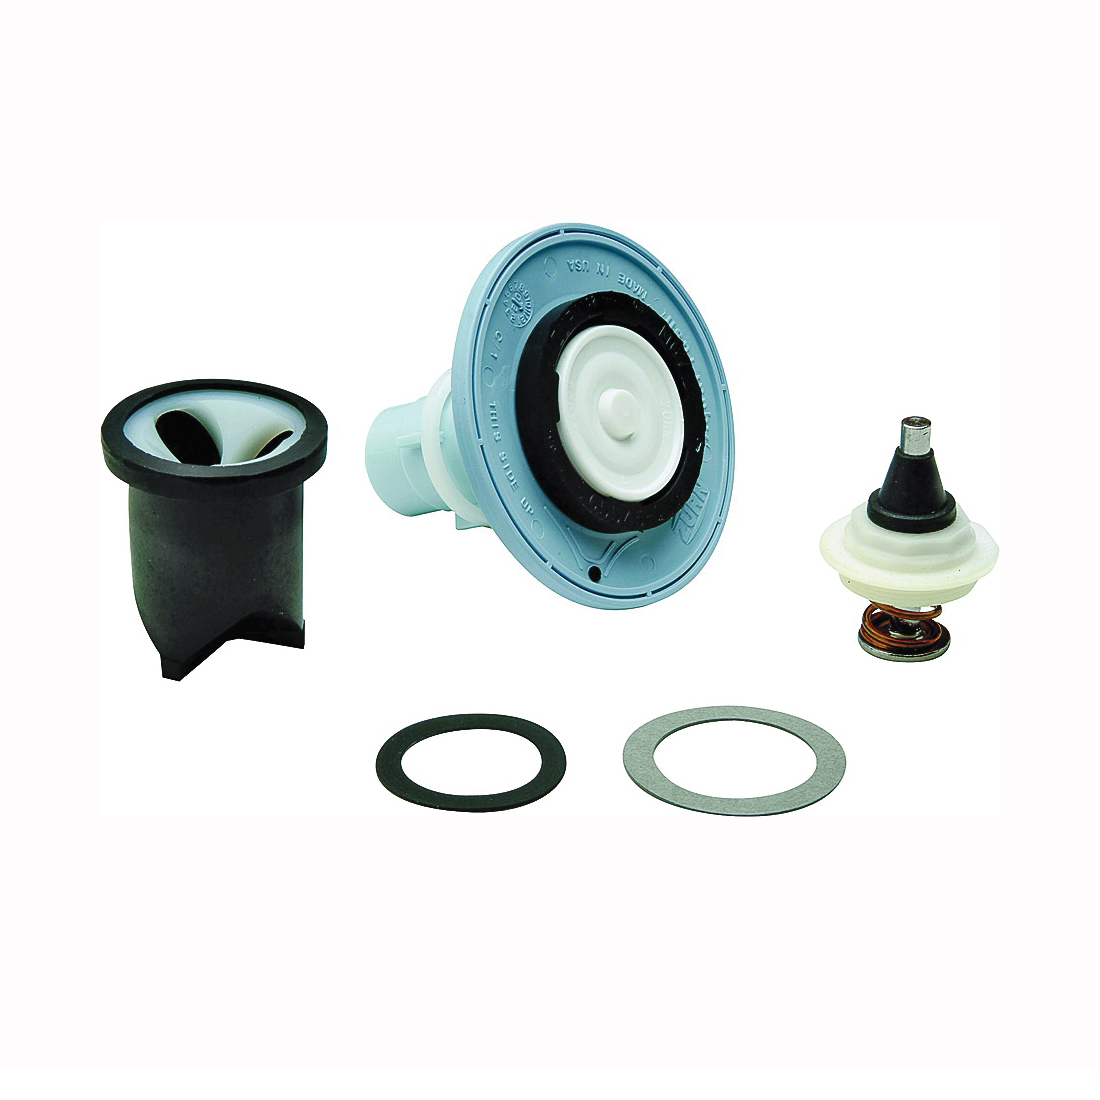 P6000-EUR-WS-RK Diaphragm Rebuild Kit, Plastic/Rubber, Blue, For: 0.5 gpf Urinals